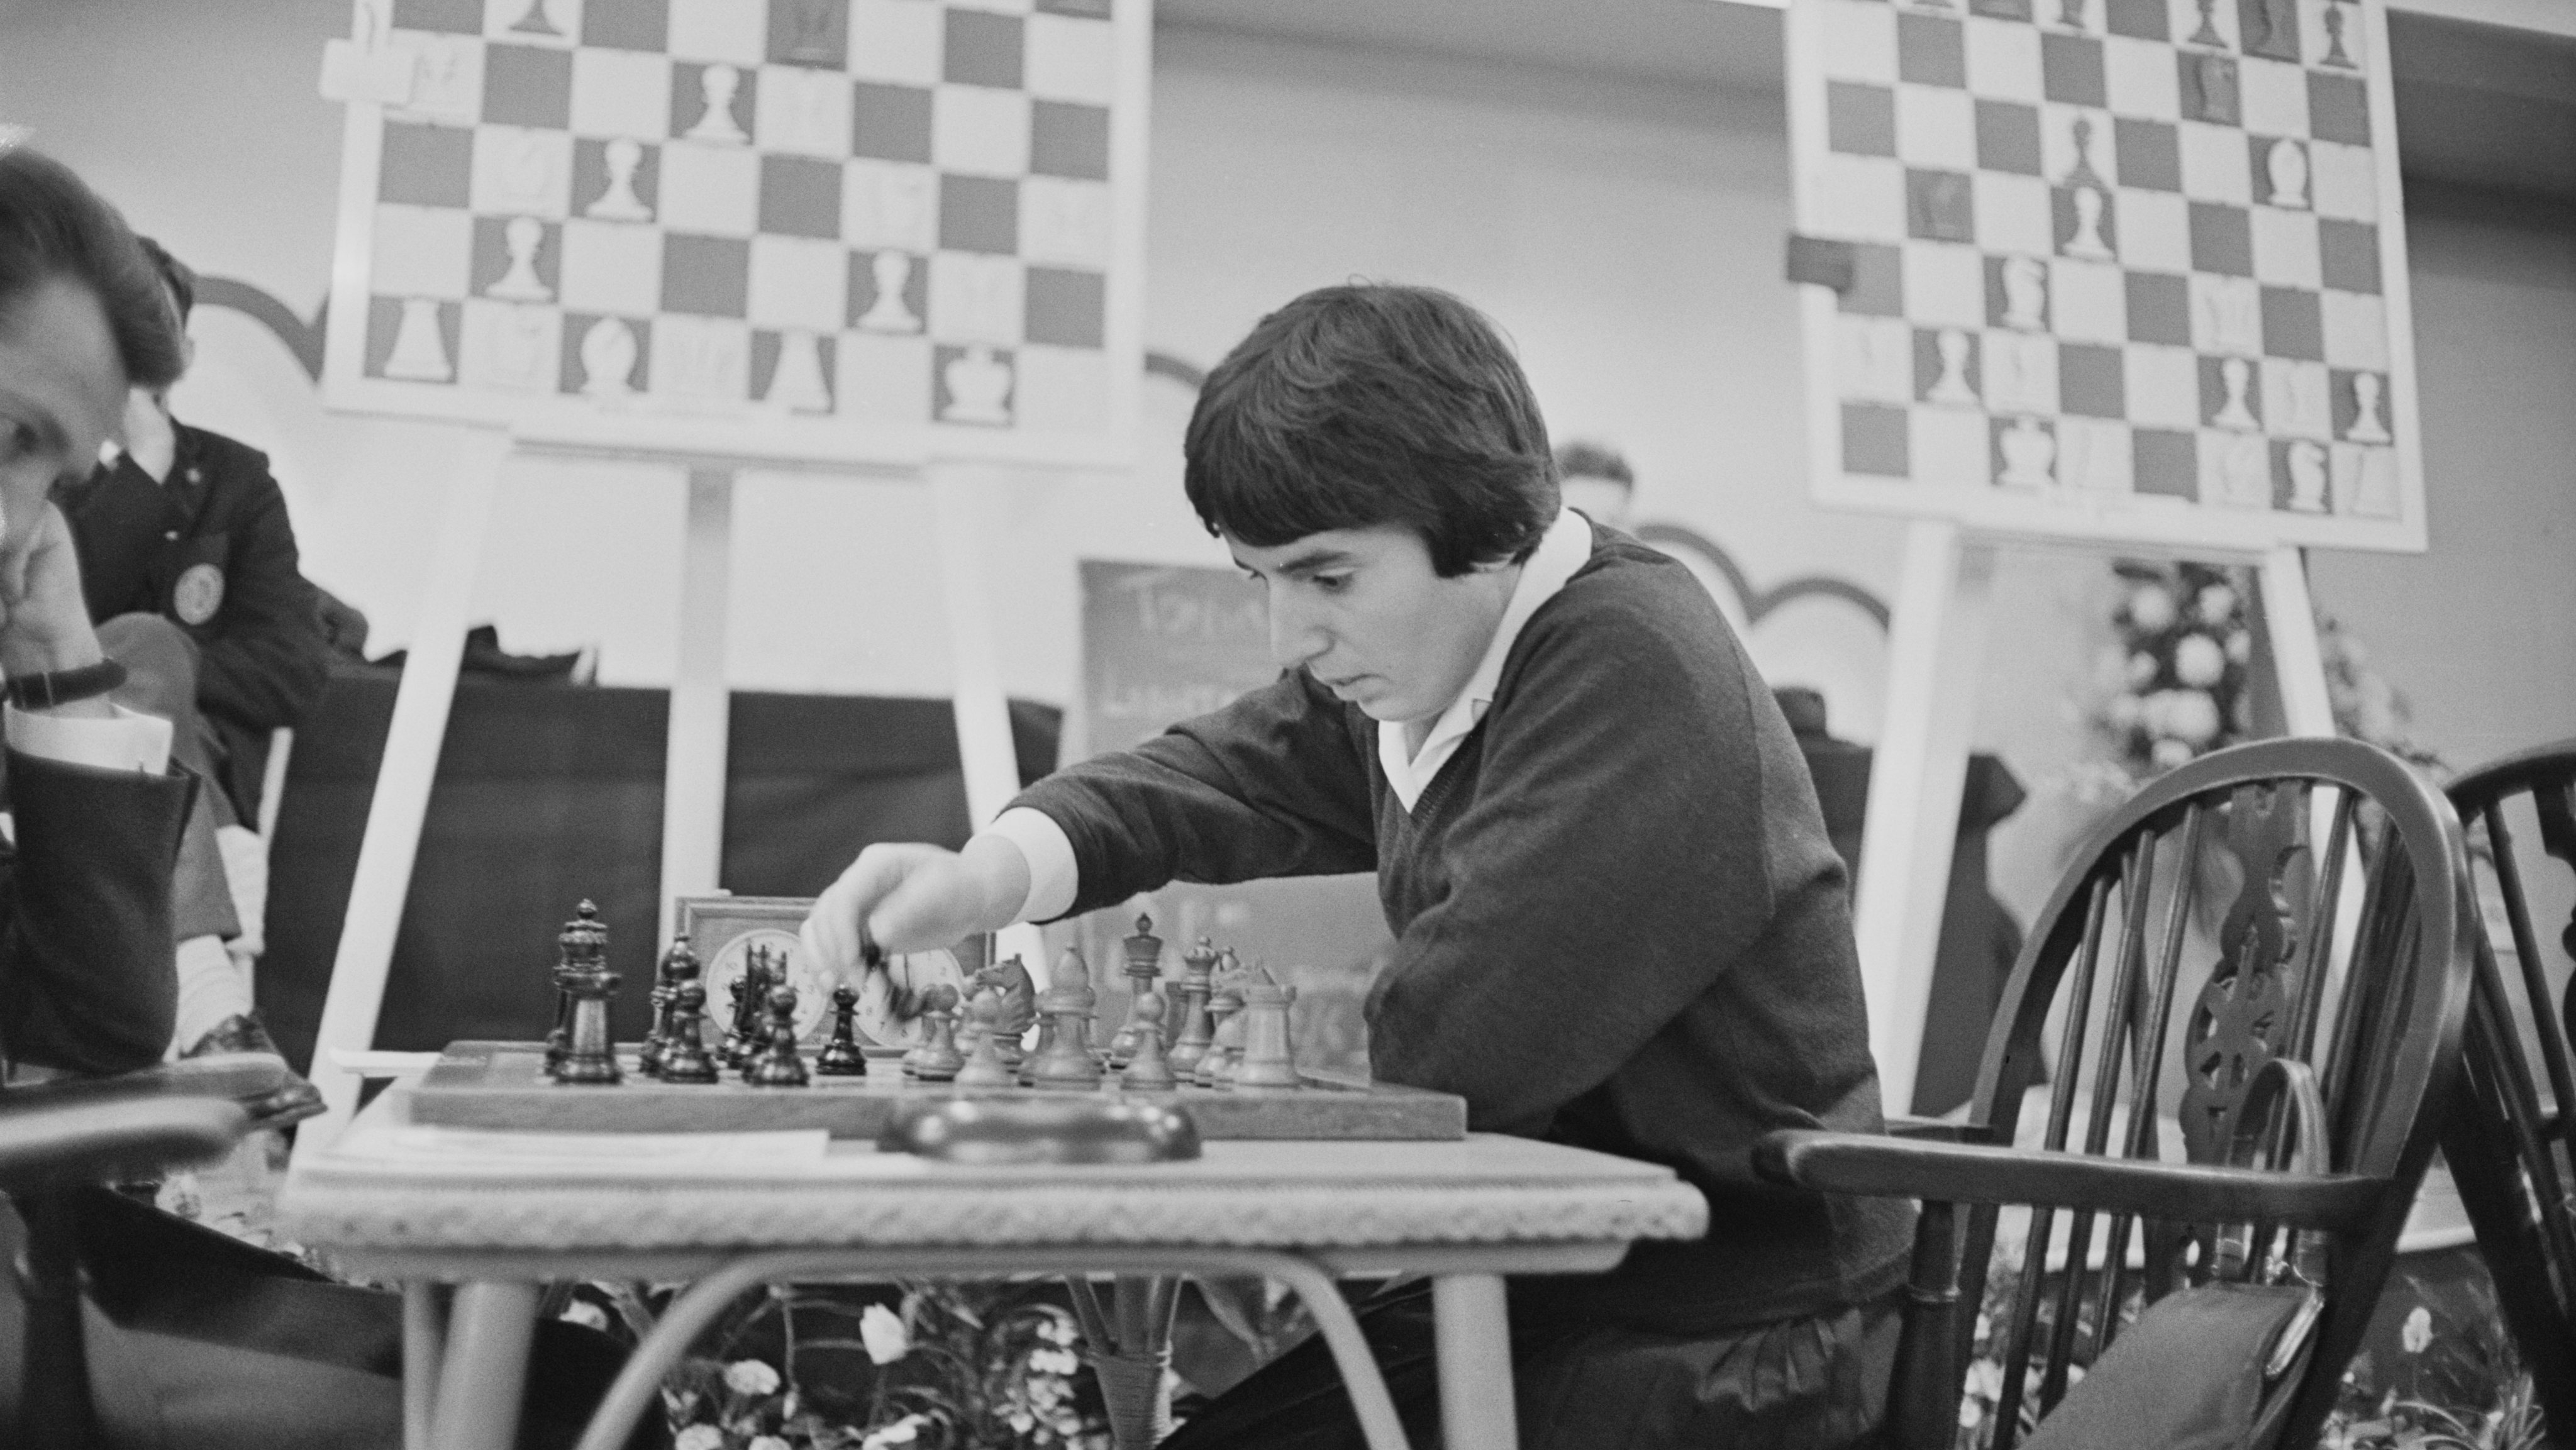 A primeira campeã mundial de xadrez processa Netflix pela série “O Gambito  da Dama” – Observador